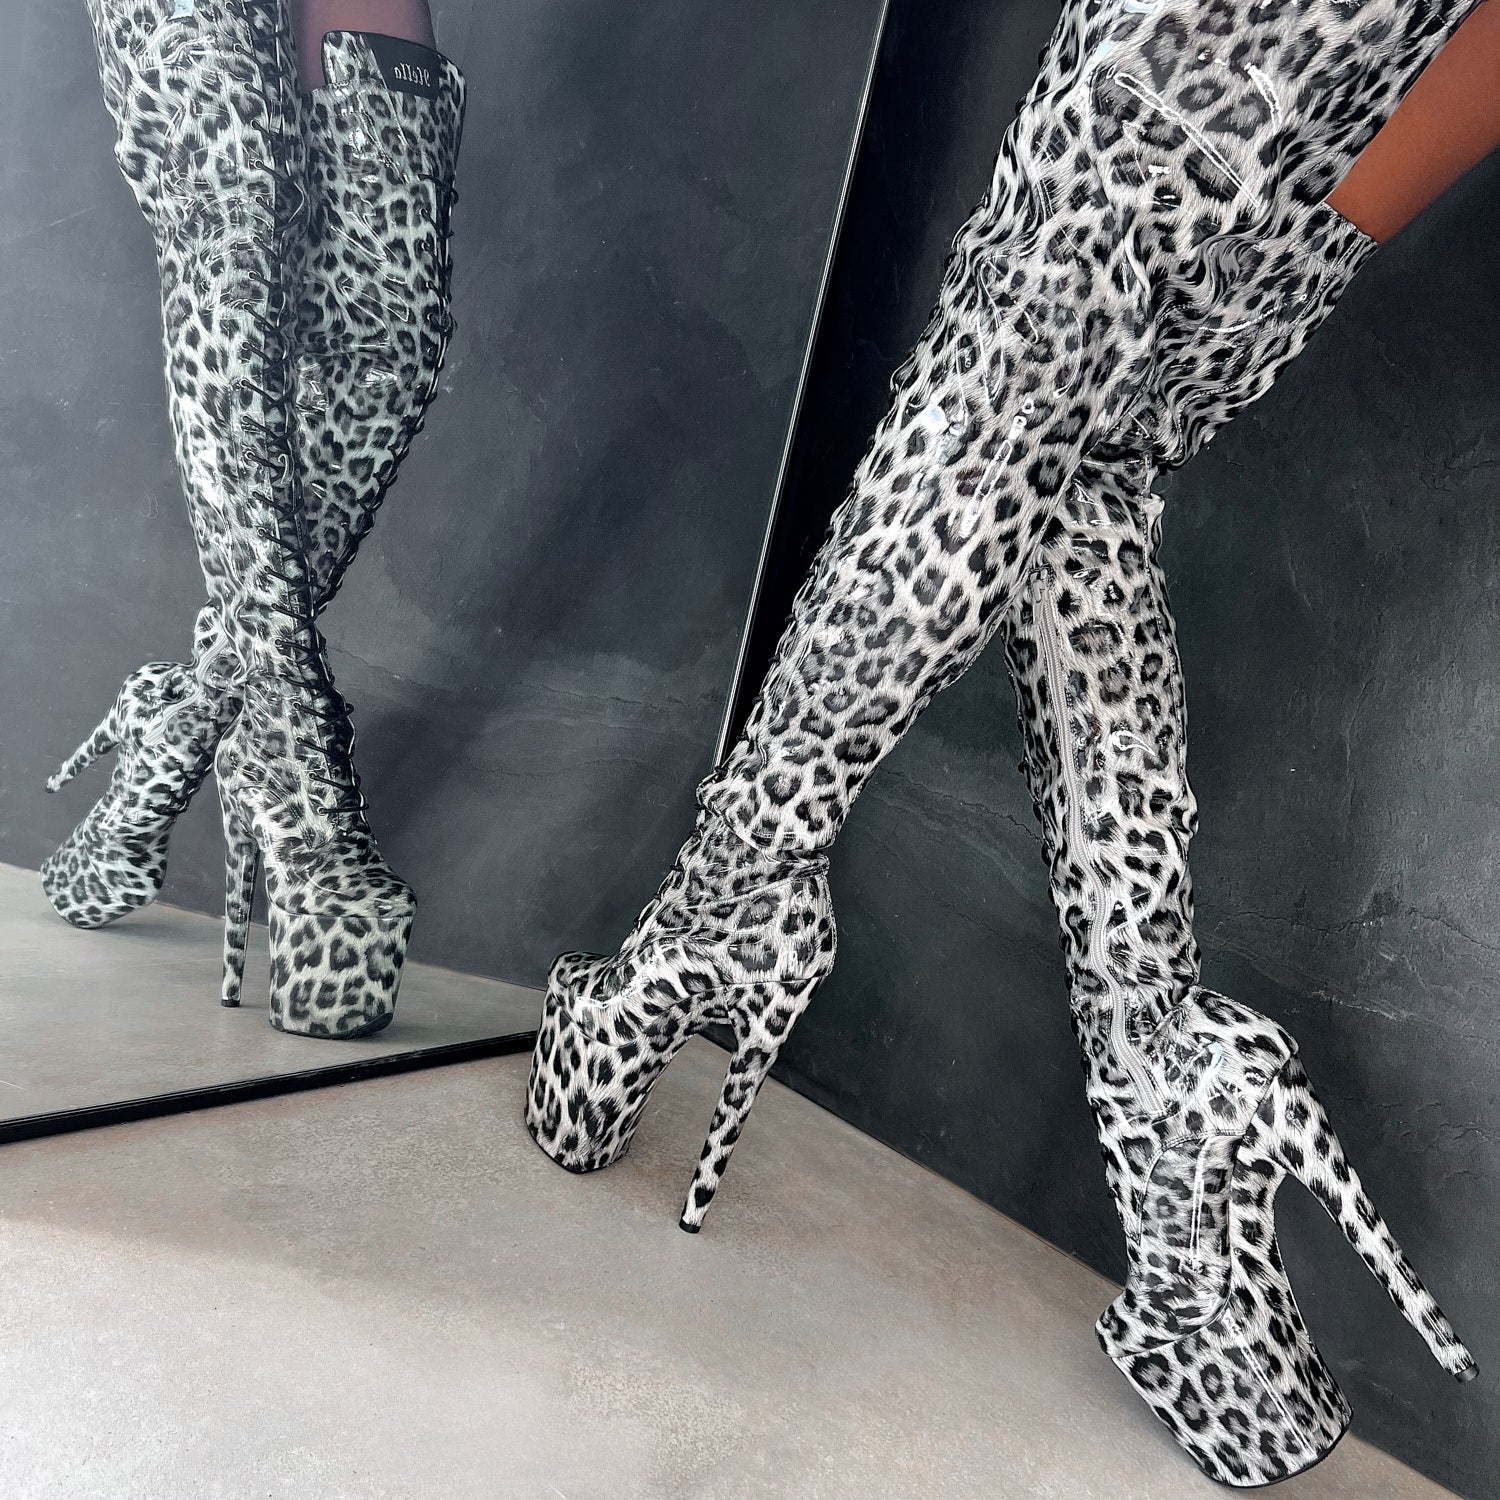 Snow Leopard Thigh High - 8 INCH + SP, stripper shoe, stripper heel, pole heel, not a pleaser, platform, dancer, pole dance, floor work